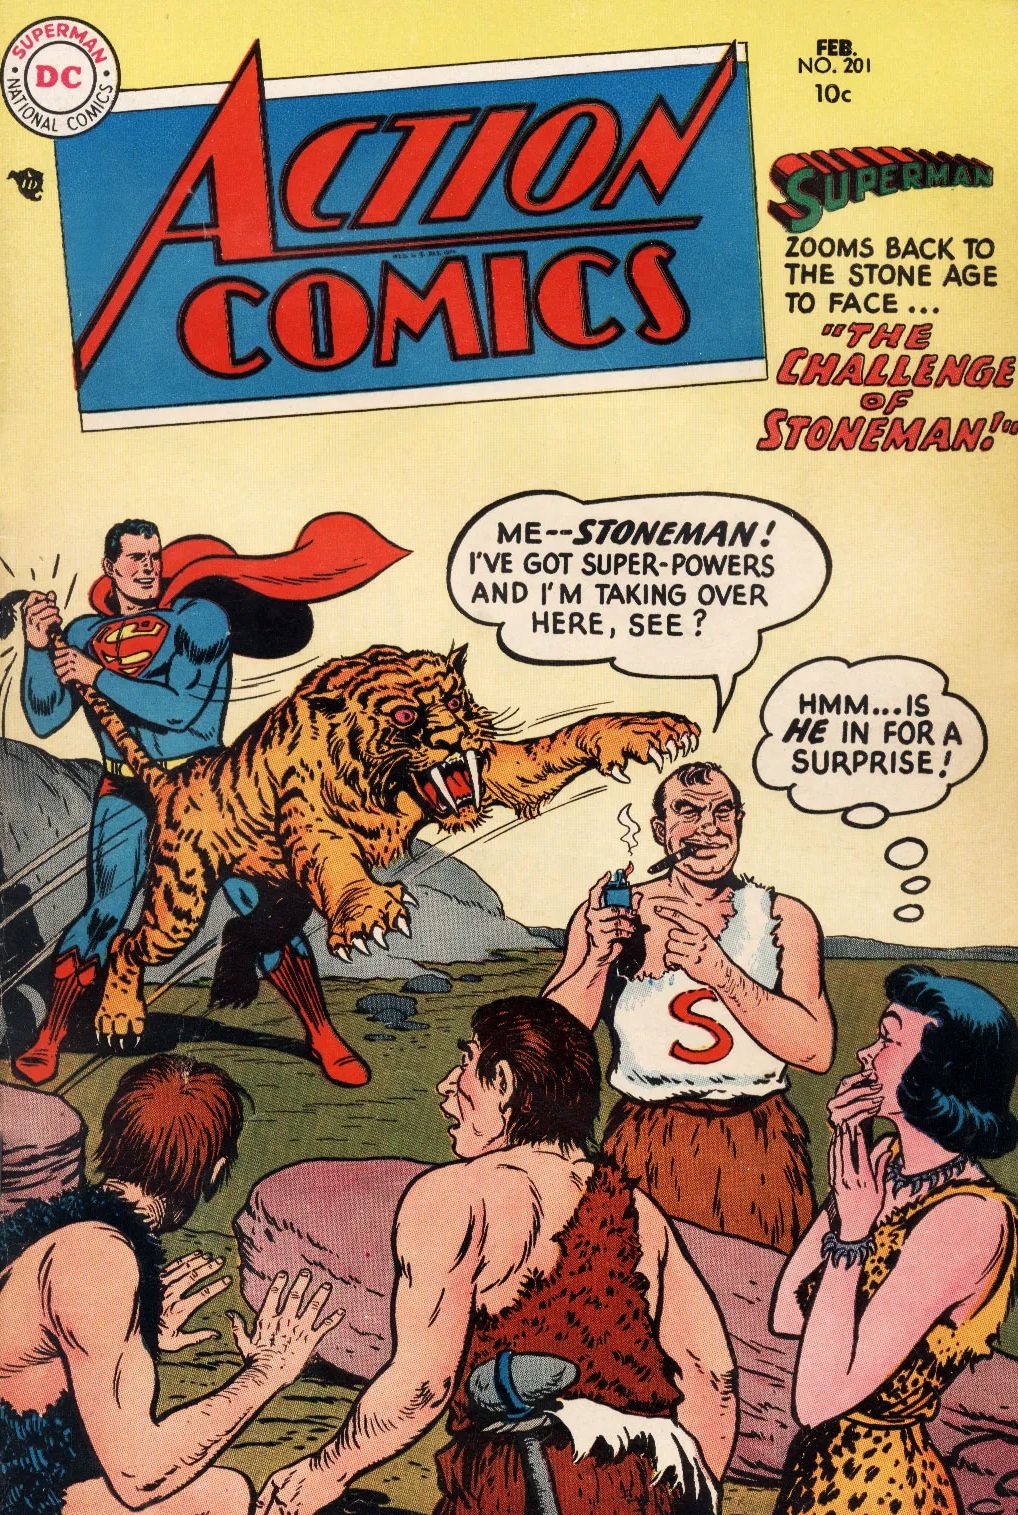 Action Comics #201 Comic